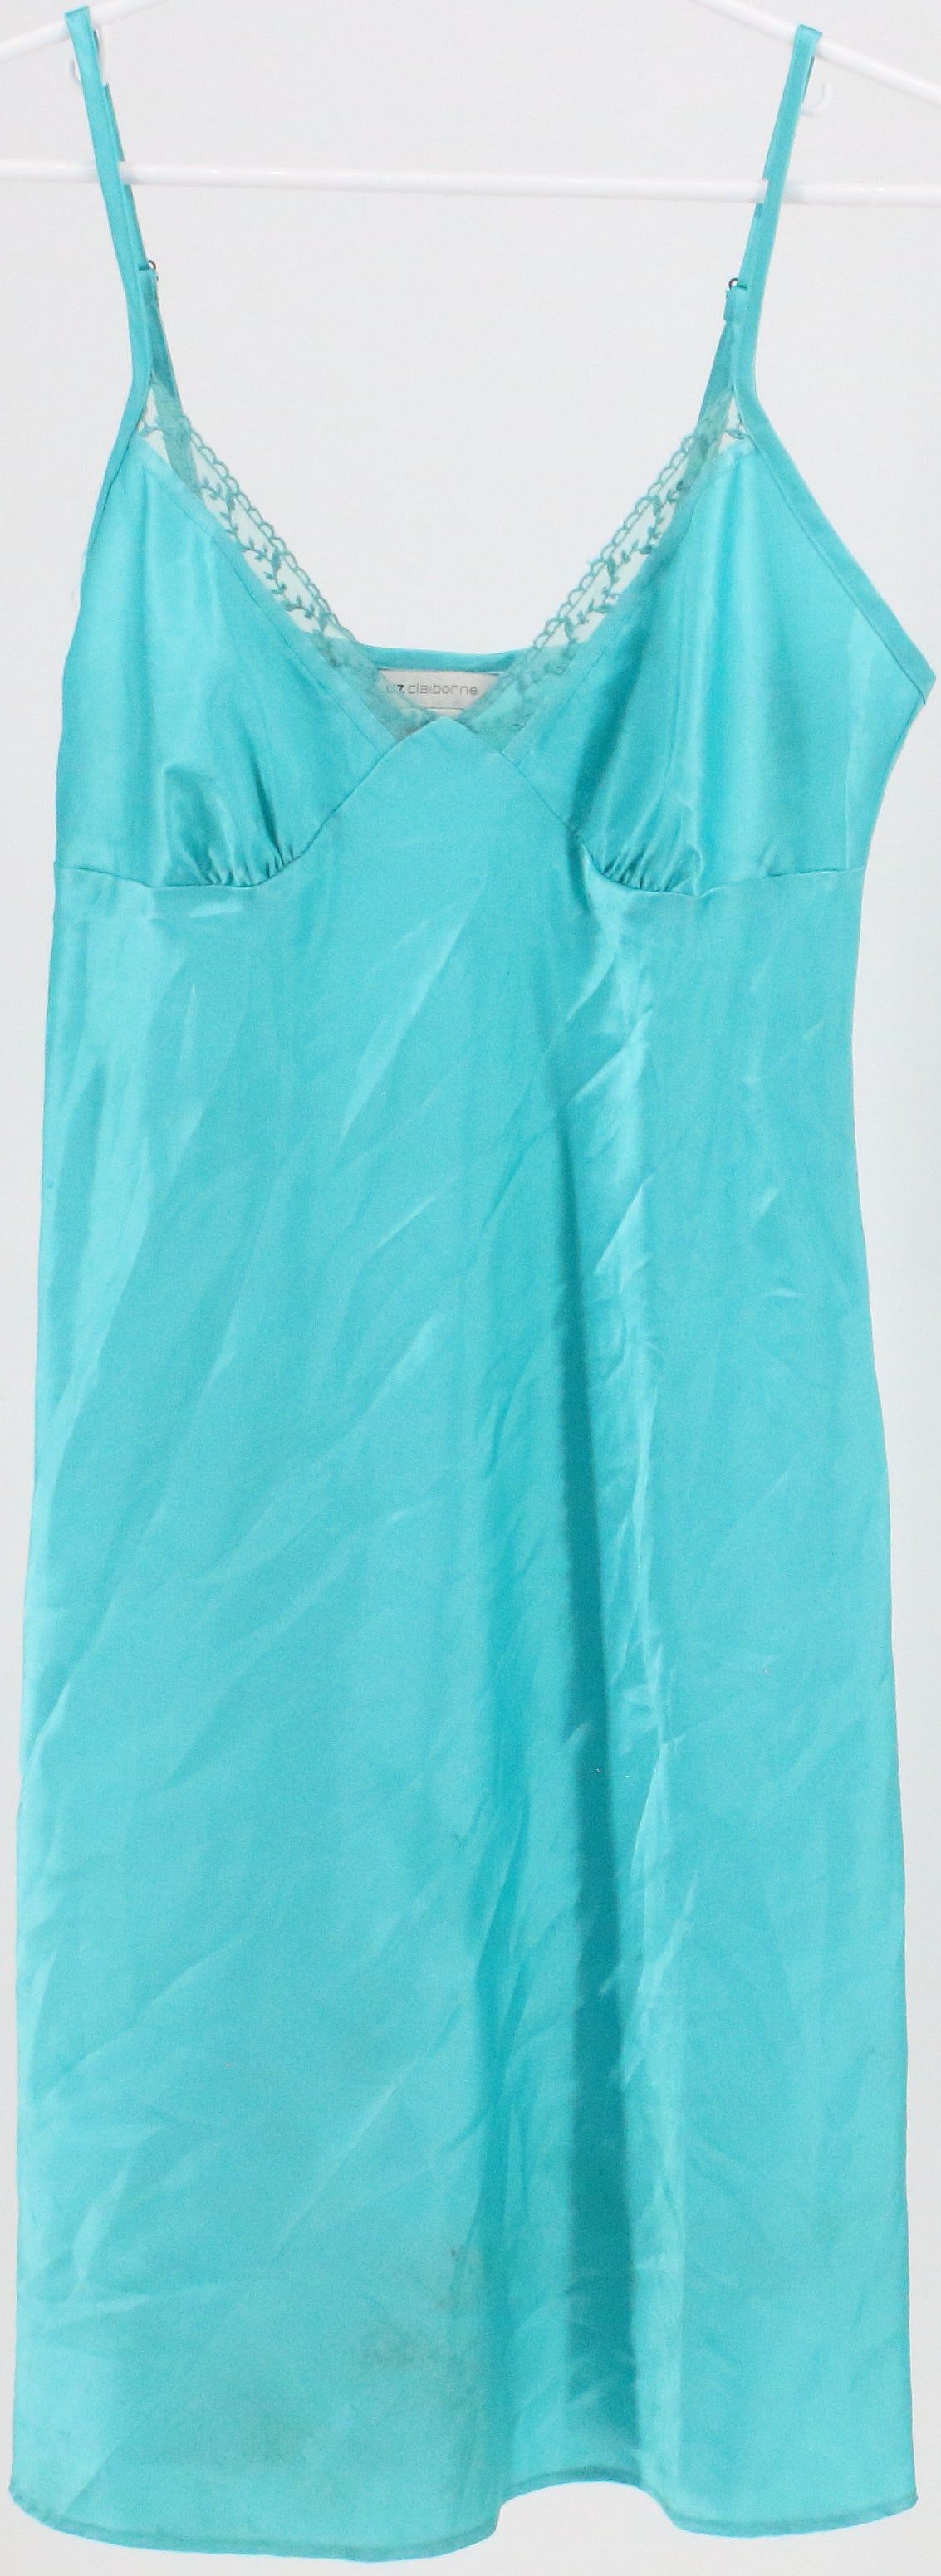 Liz Claiborne Turquoise Slip Dress